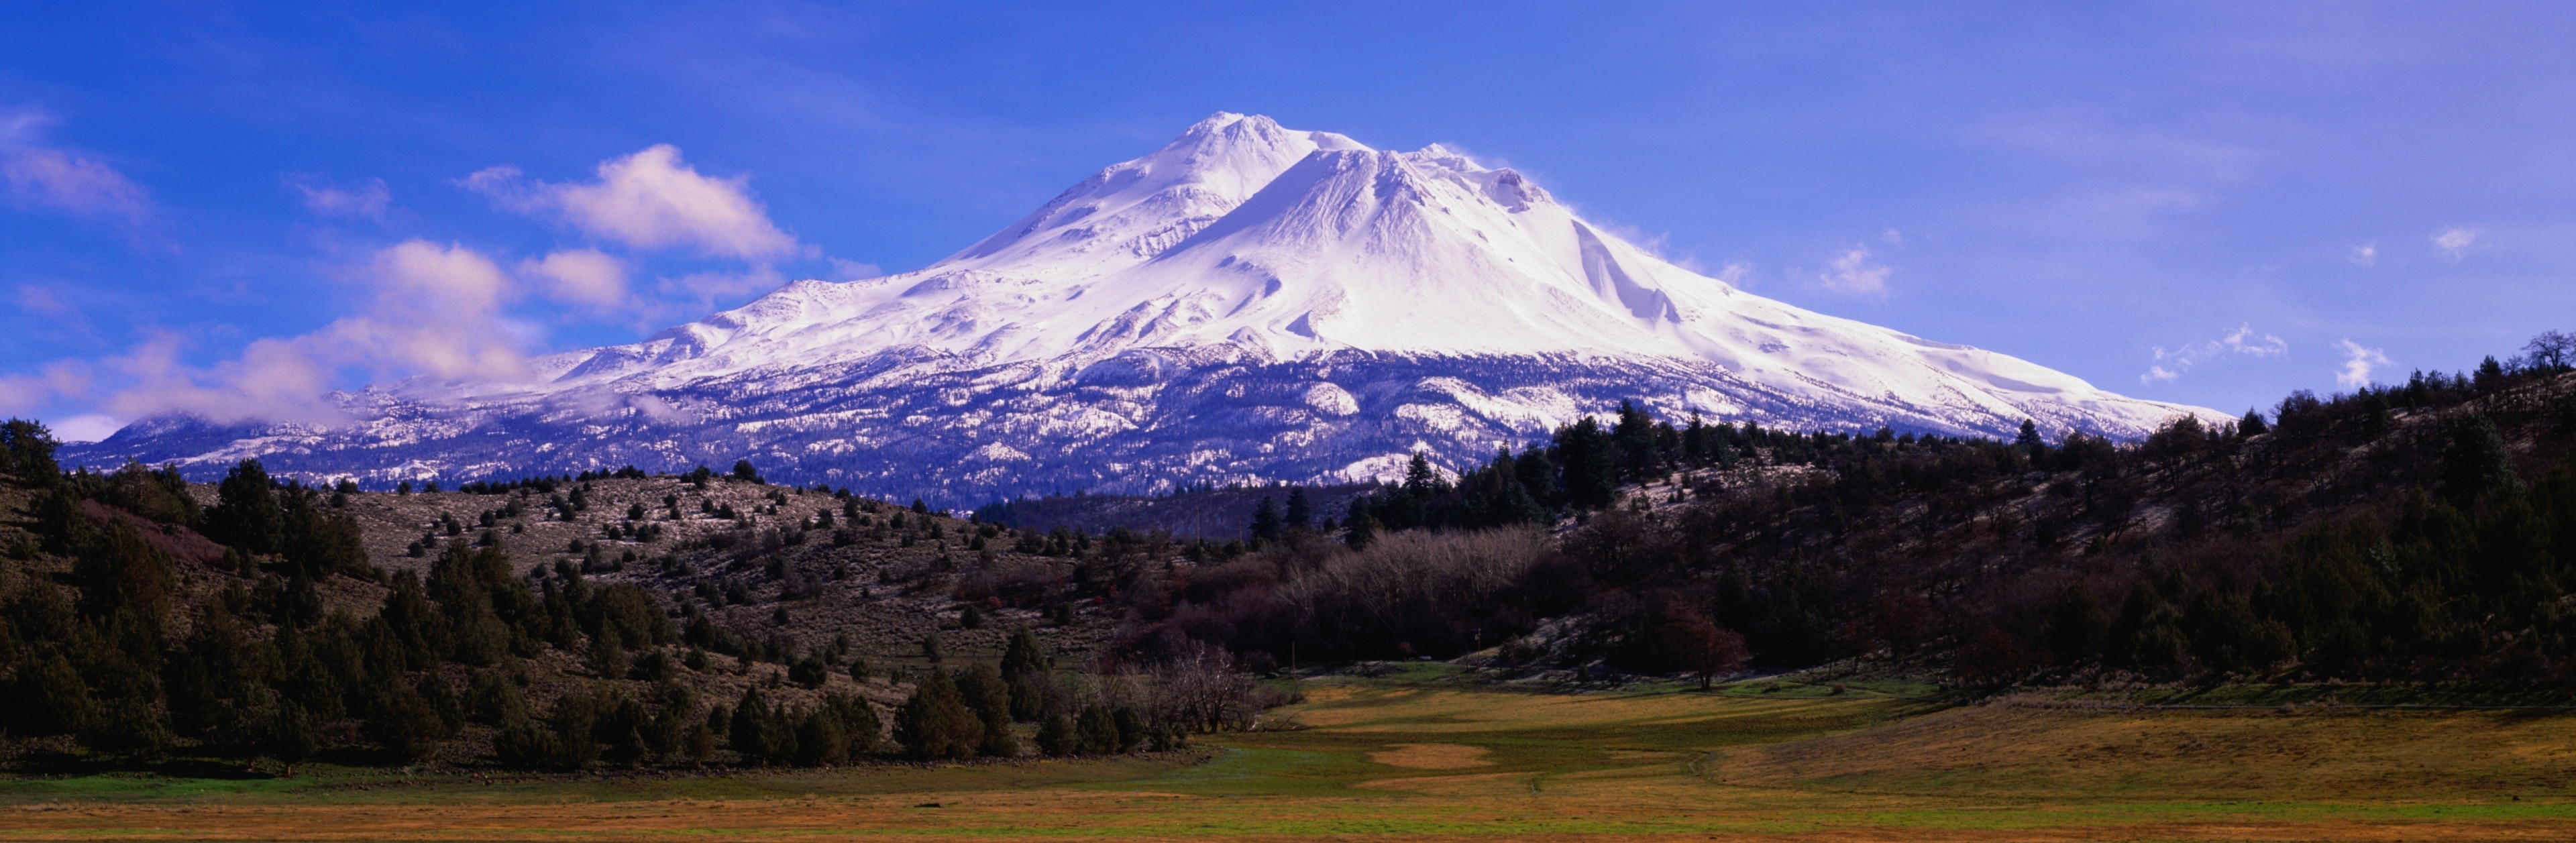 Mount Shasta, California, United States of America